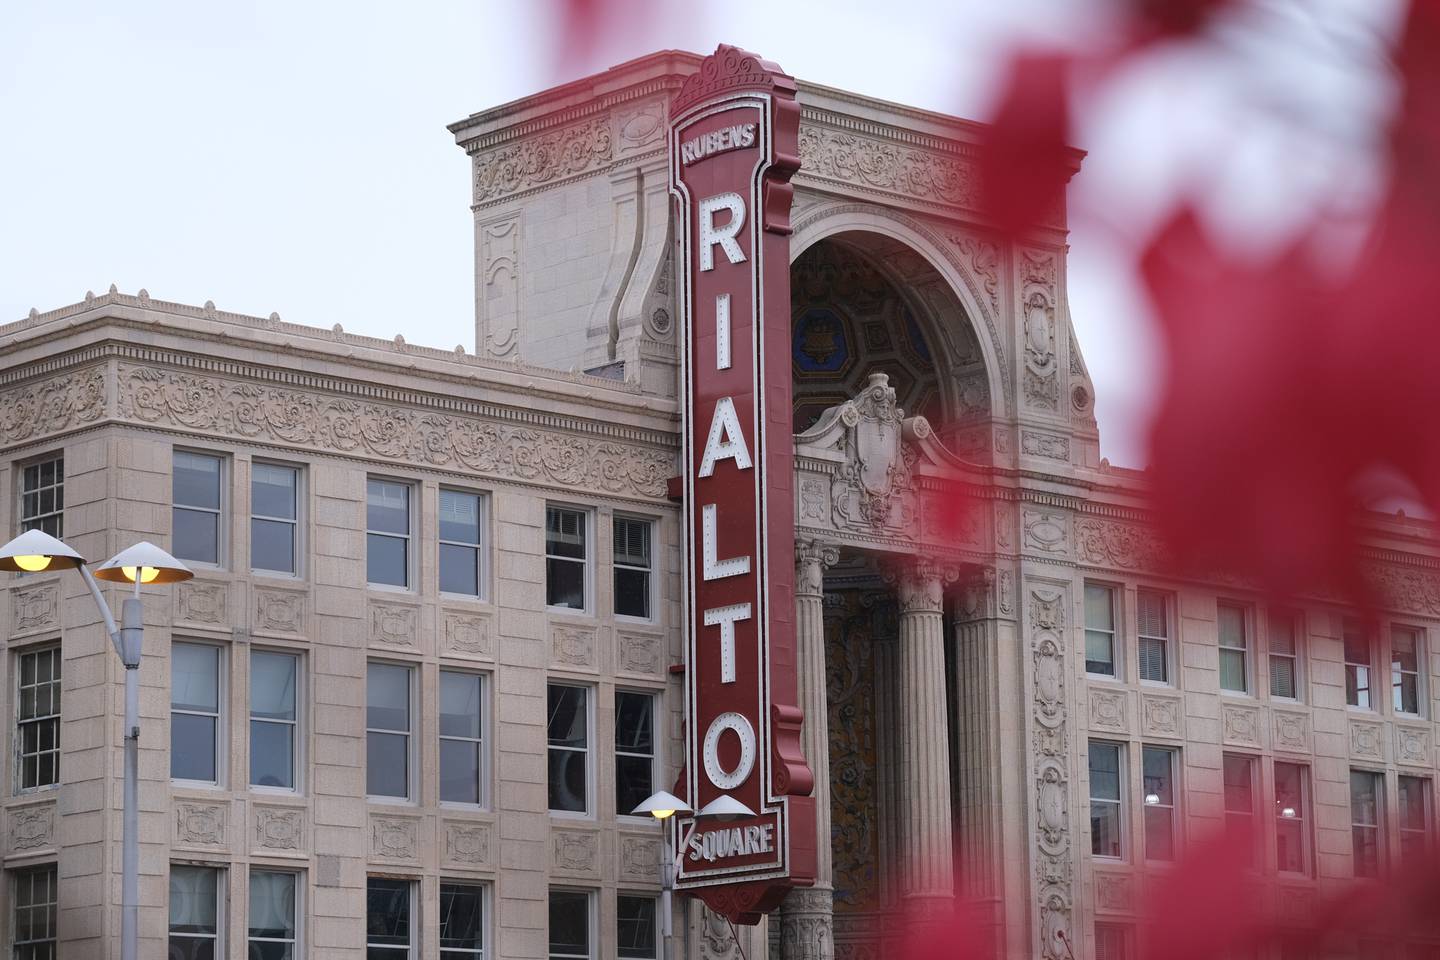 The Rialto Square Theatre along N. Chicago St. in Joliet.